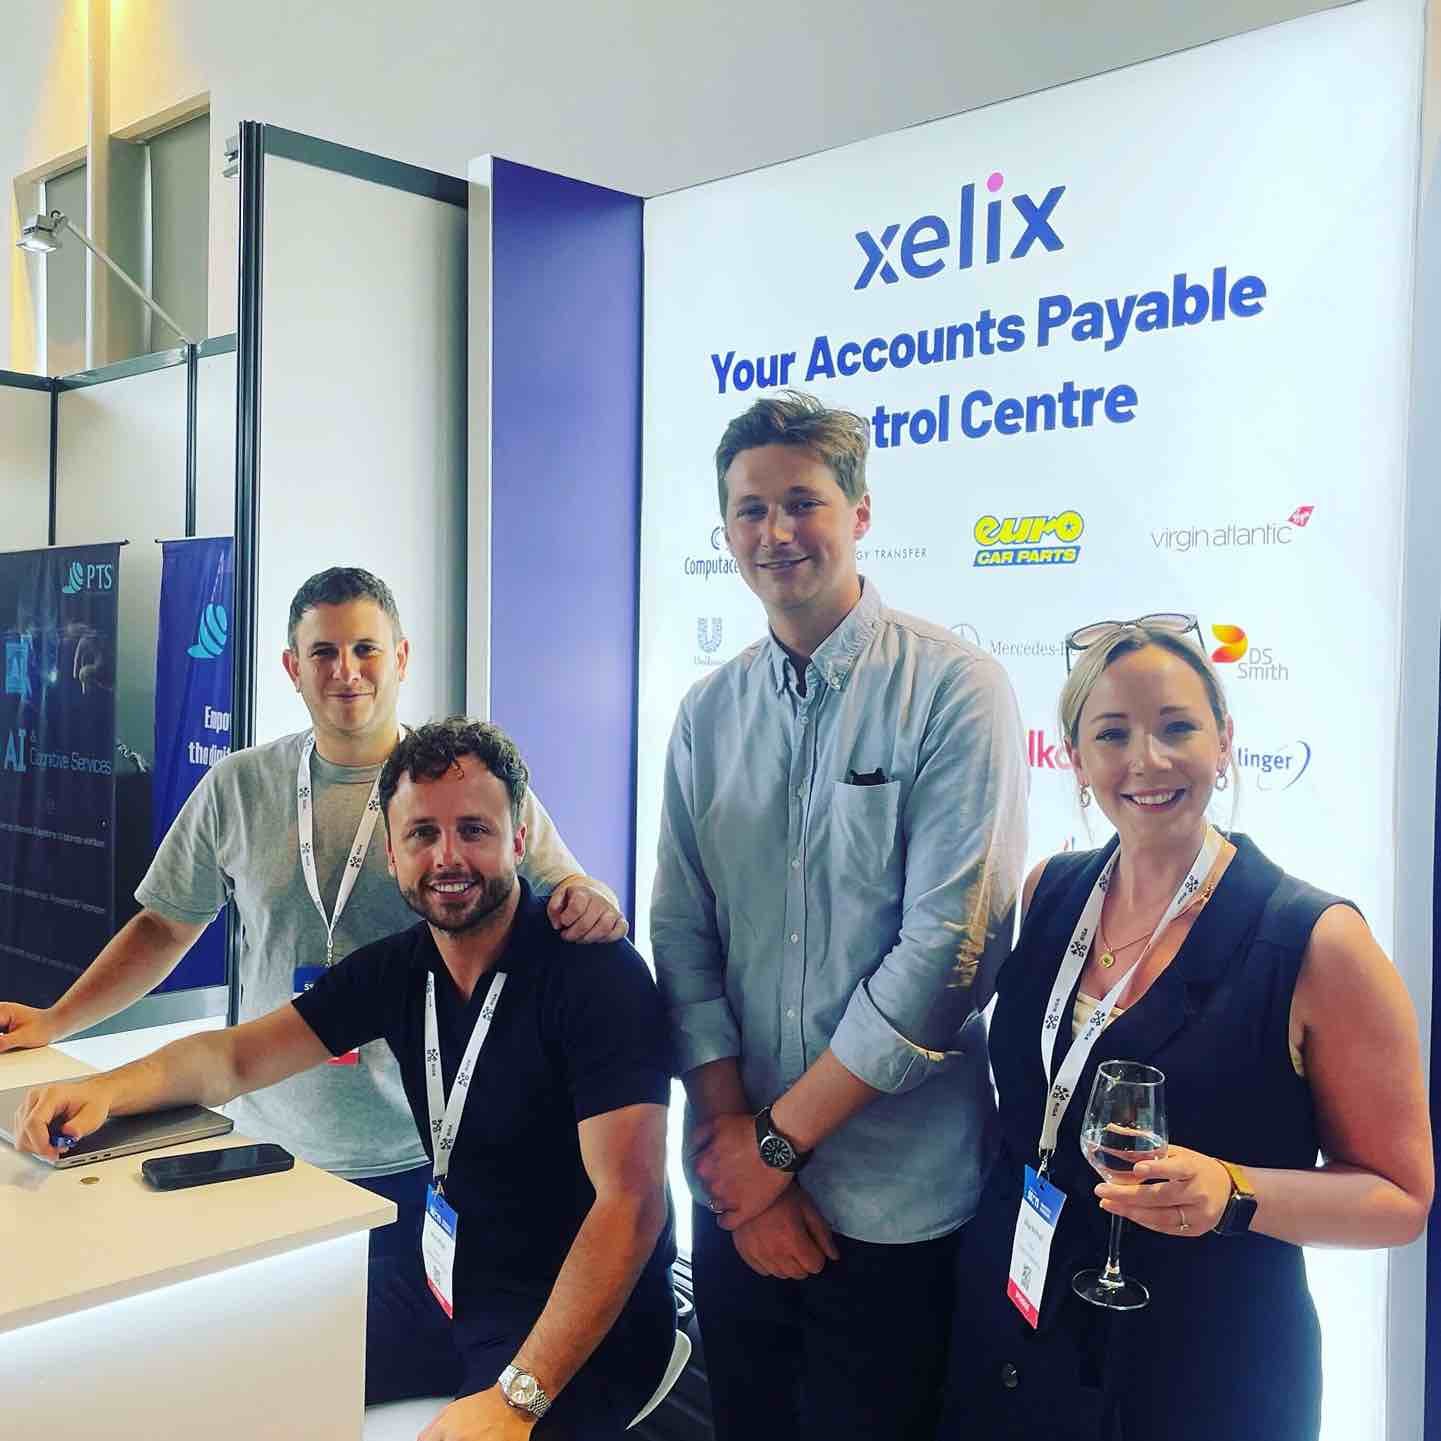 Xelix colleagues event